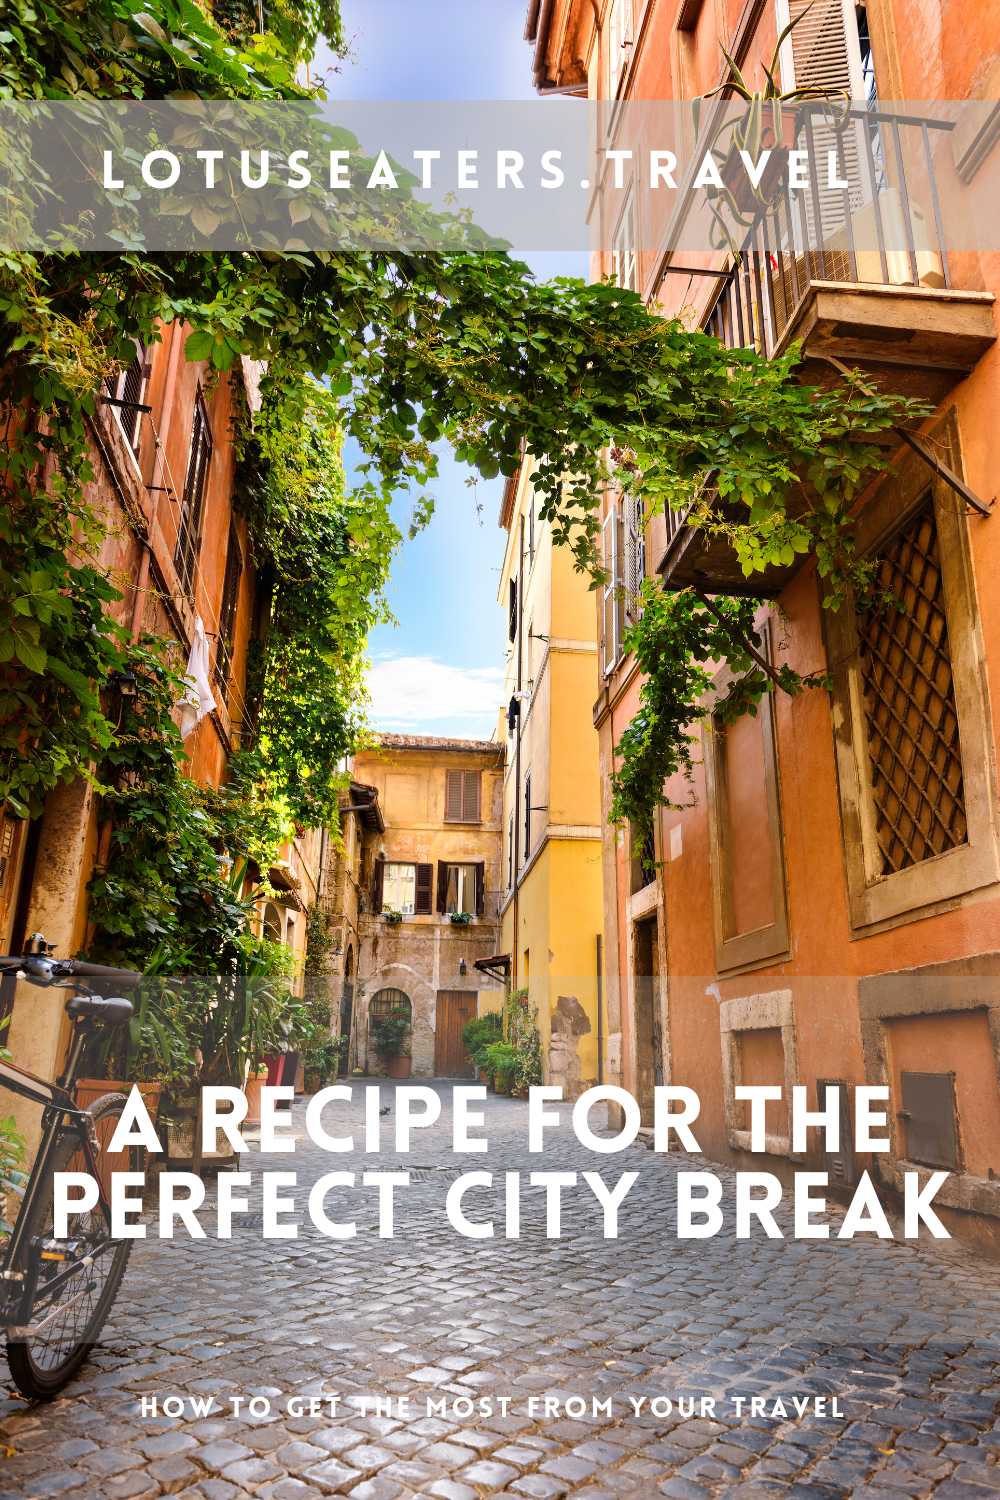 A recipe for a perfect city break